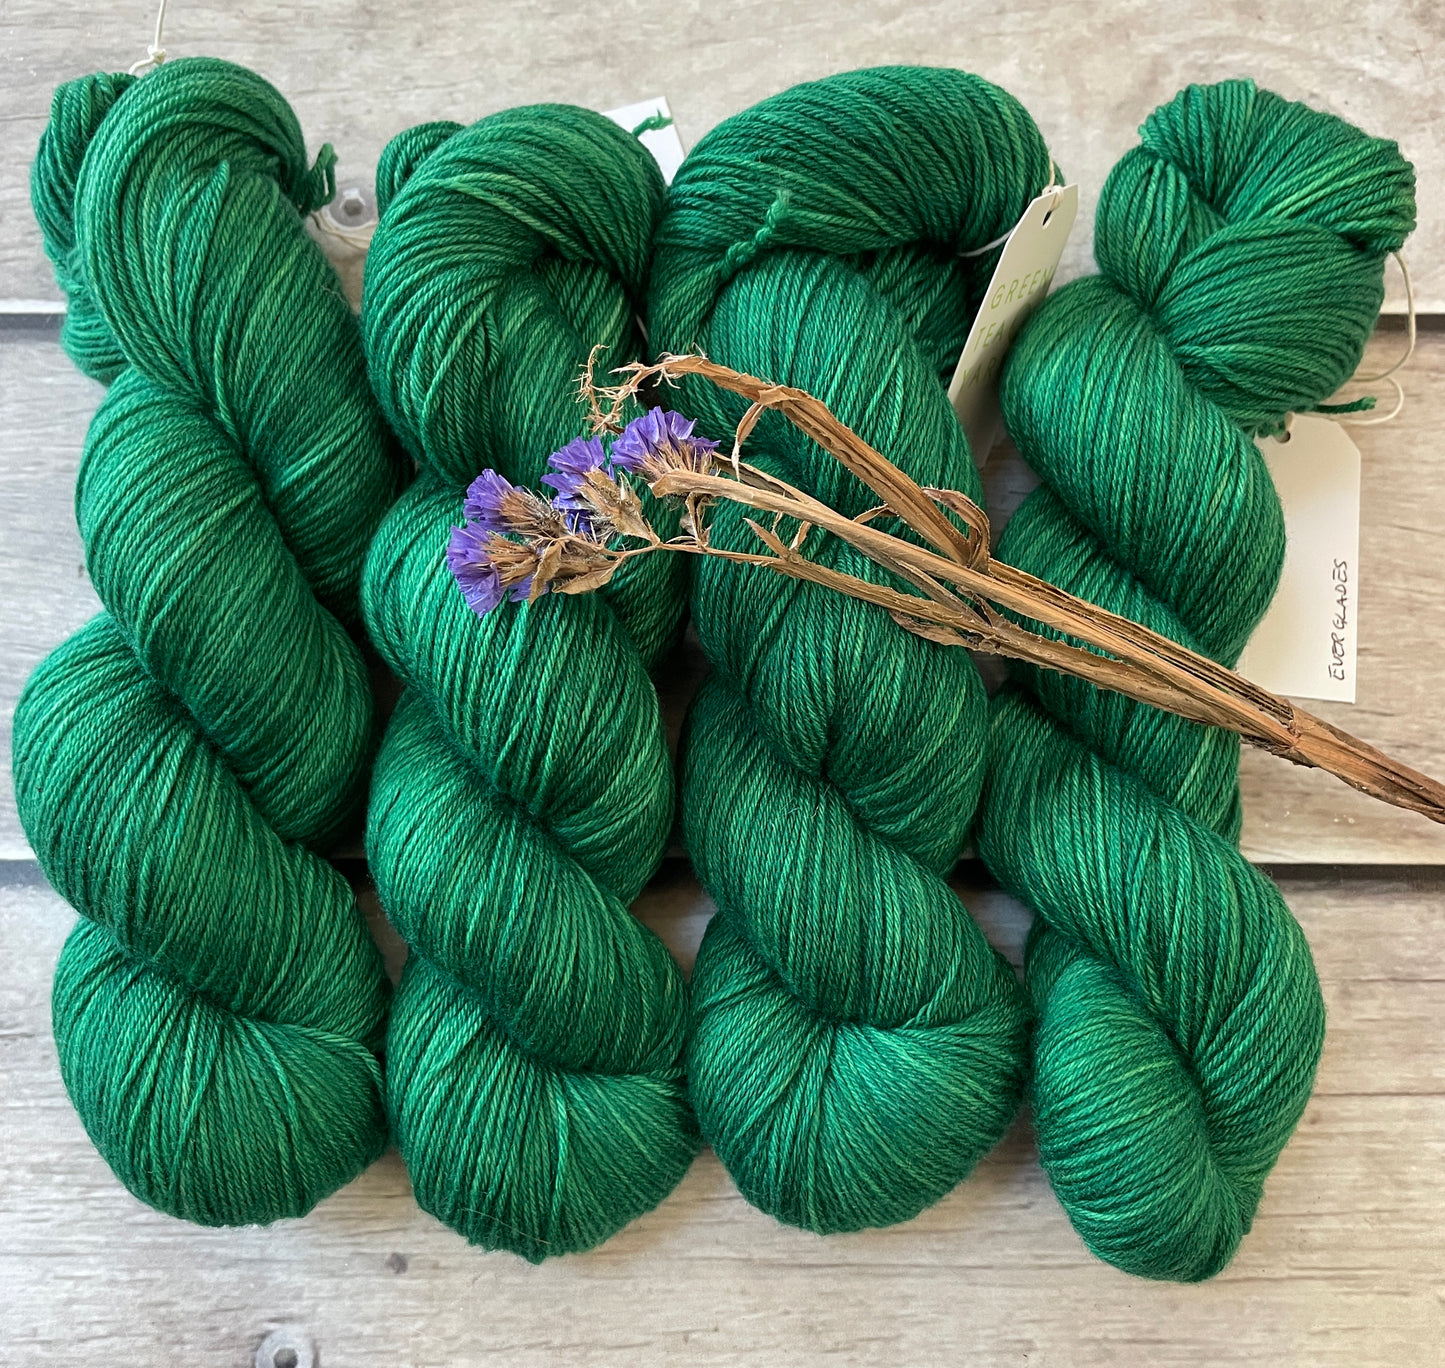 Everglades - sock yarn in merino and nylon - Darjeeling